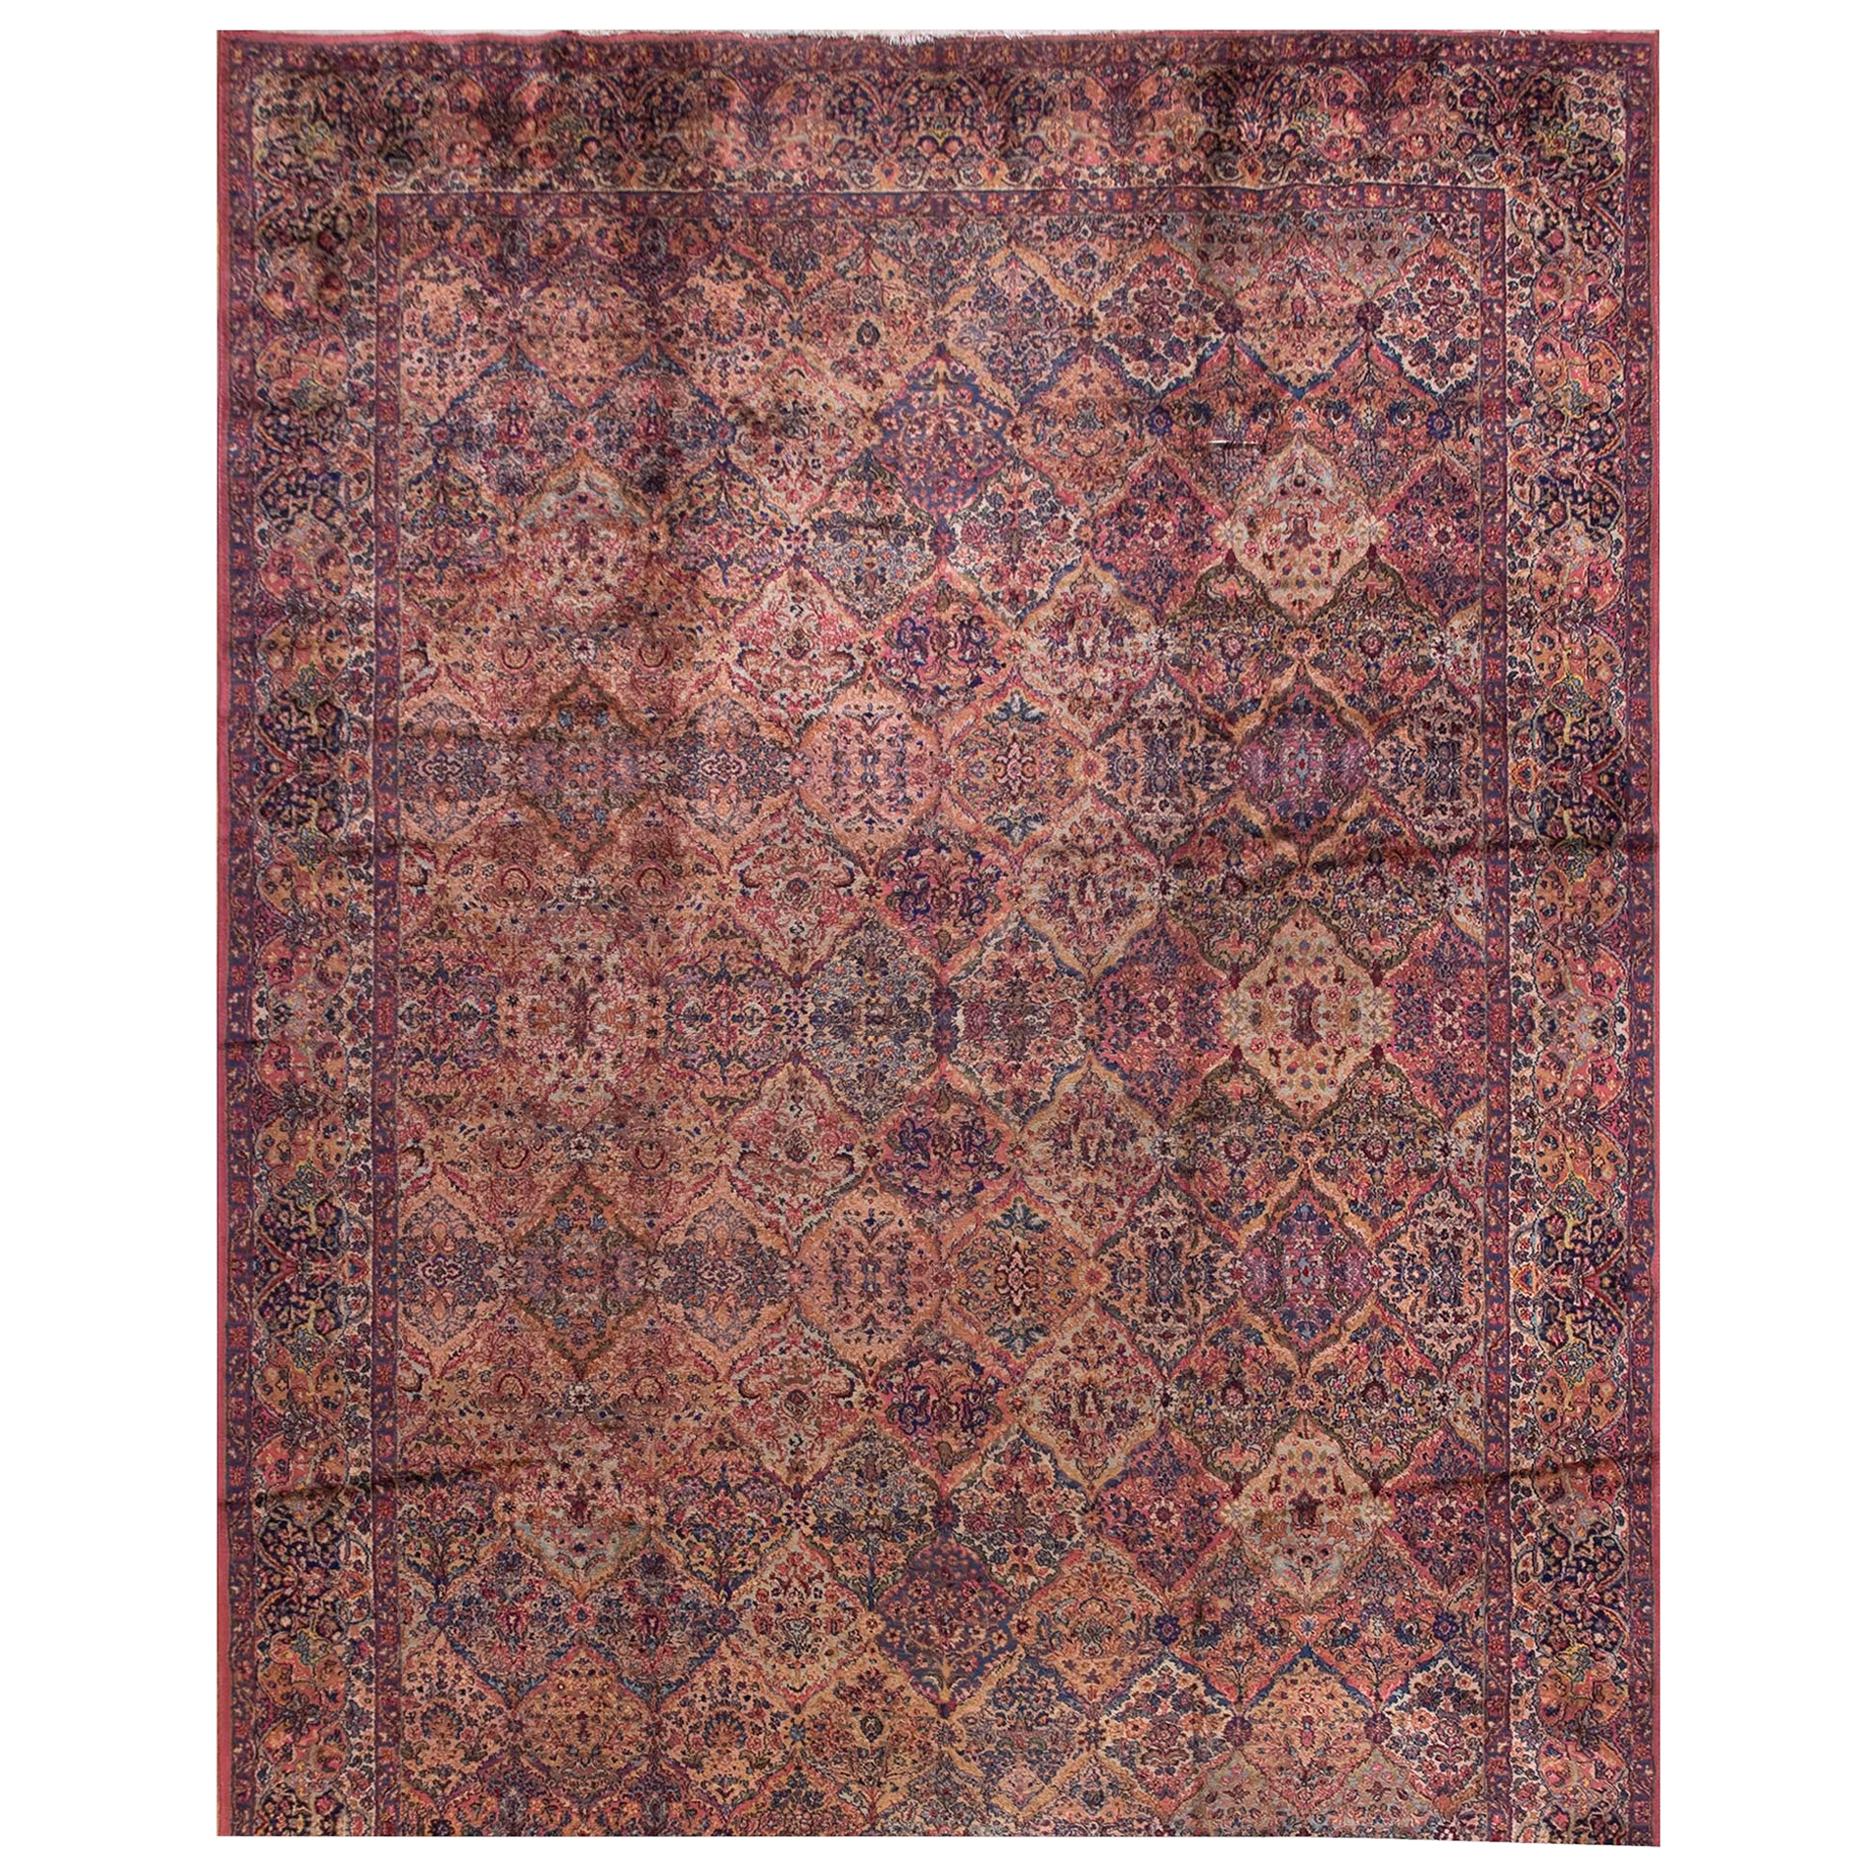  Mid 20th Century Karastan Carpet ( 11'6" x 40' x 350 x 1220 )